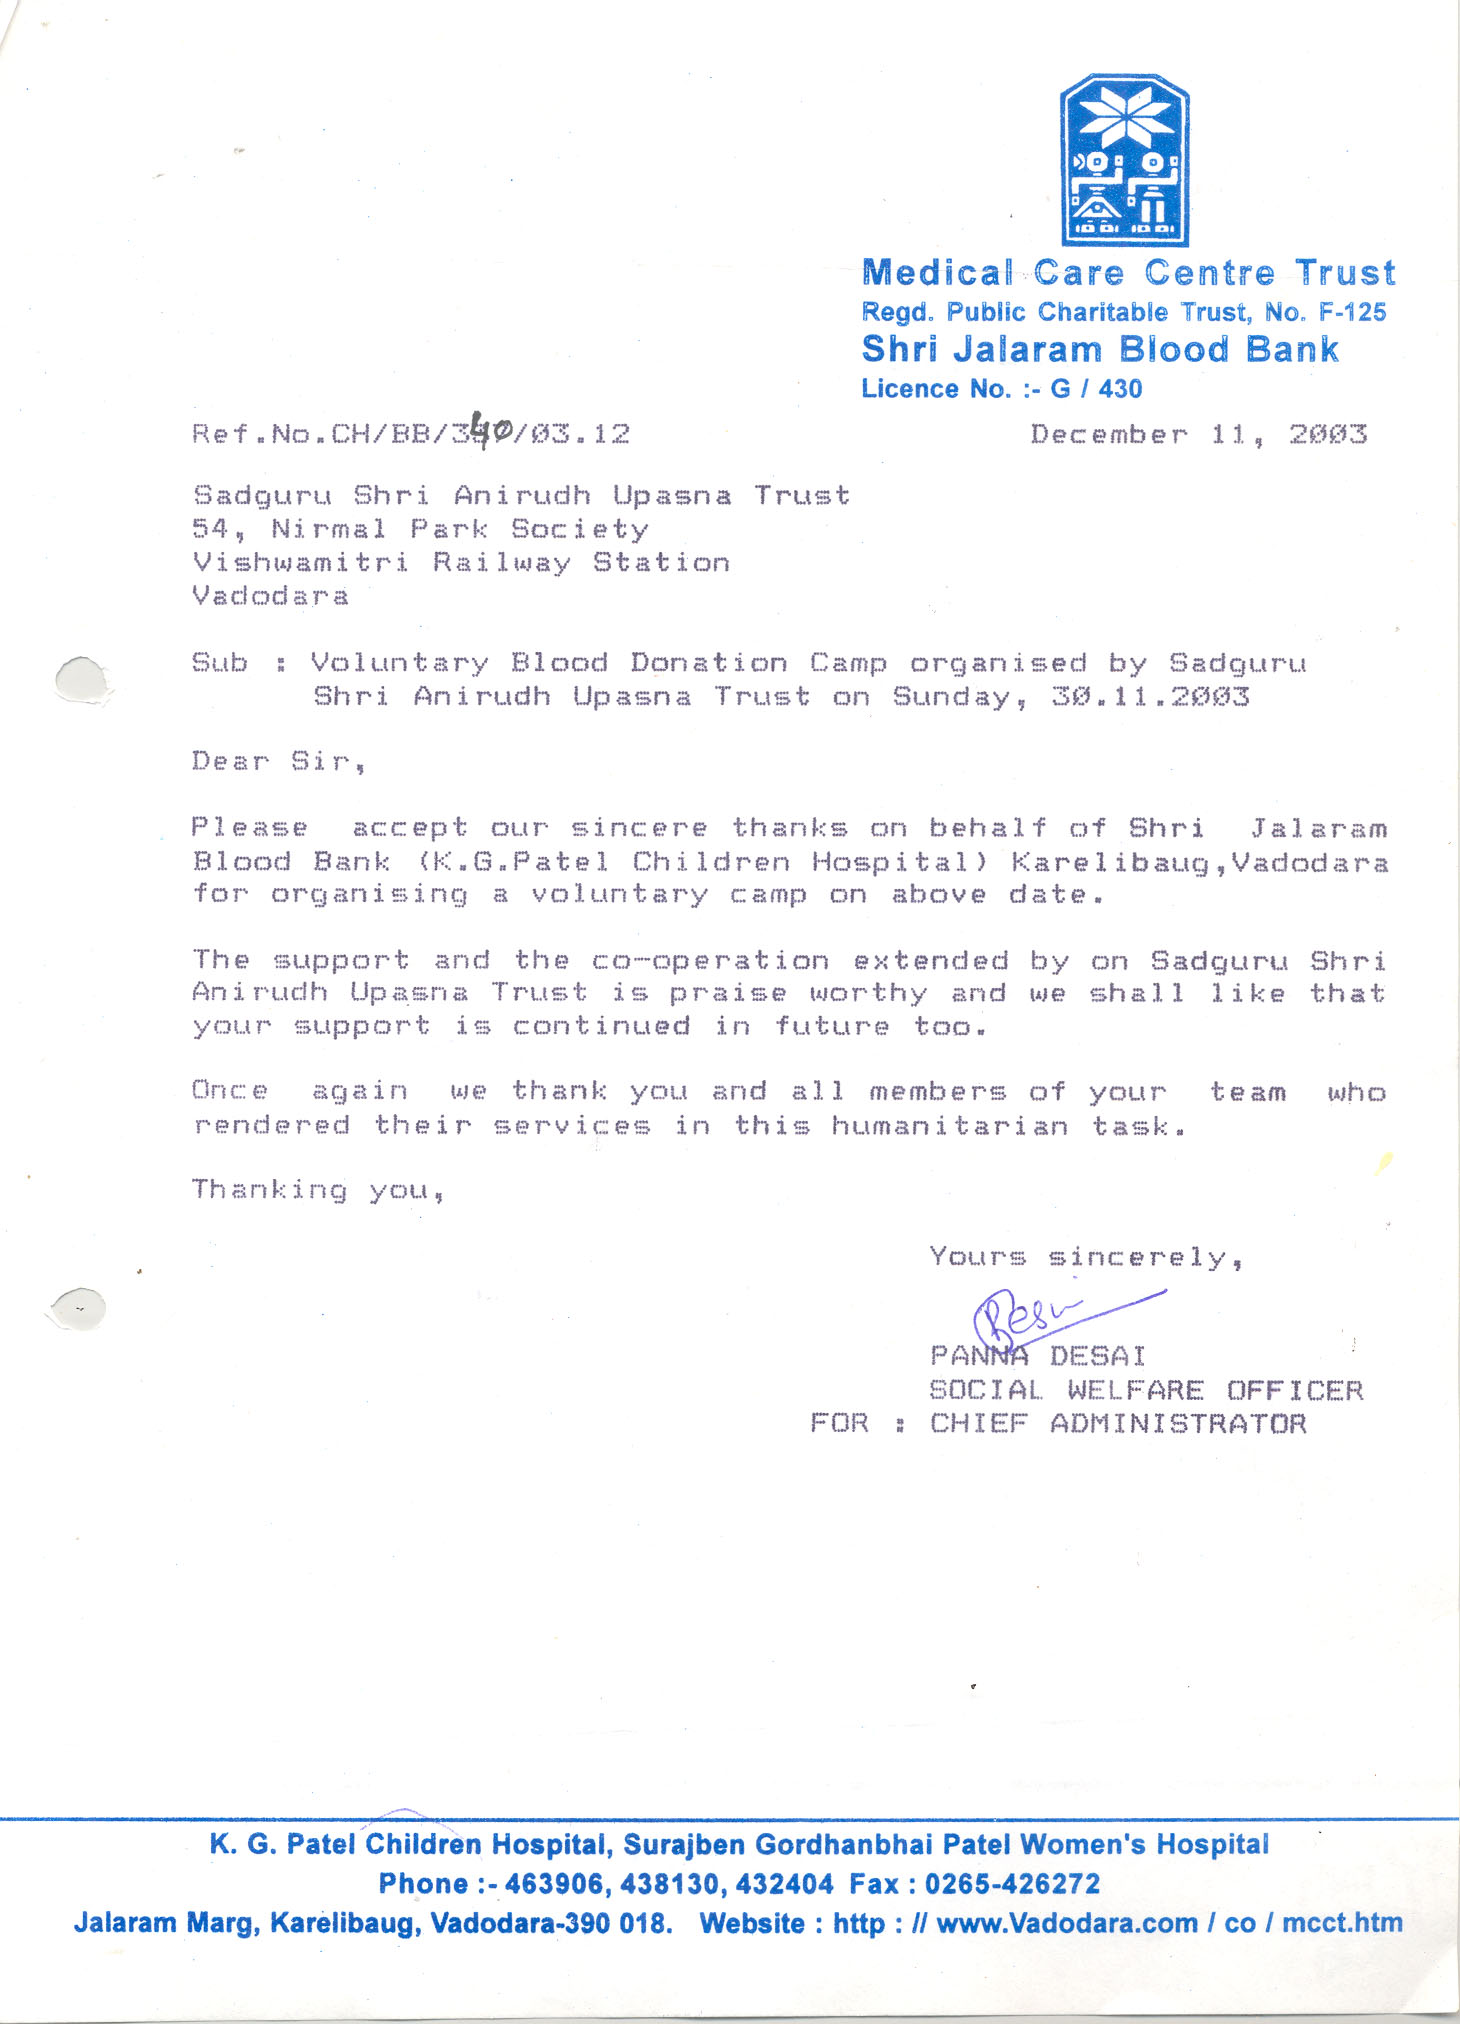 Appreciation-Letter from Shri Jalaram Blood Bank 2003-for-Aniruddhafoundation-Compassion-Social-services